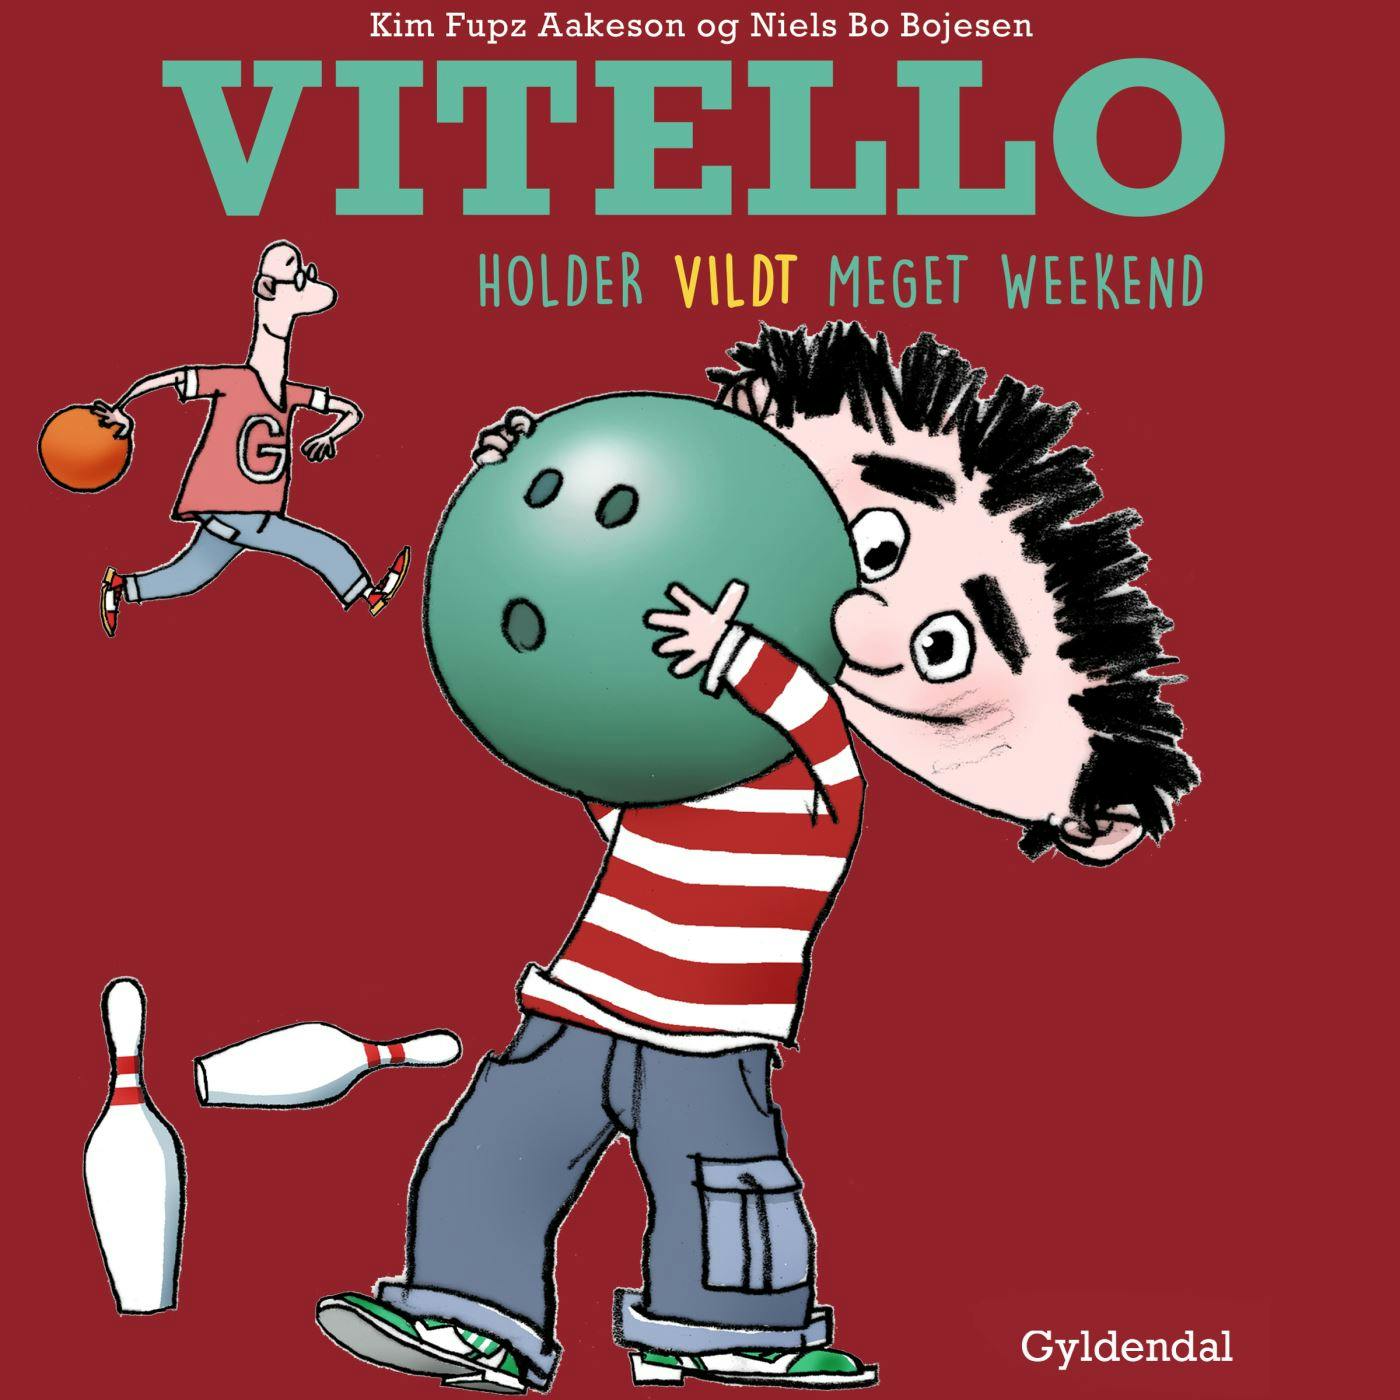 Vitello holder vildt meget weekend - Niels Bo Bojesen, Kim Fupz Aakeson